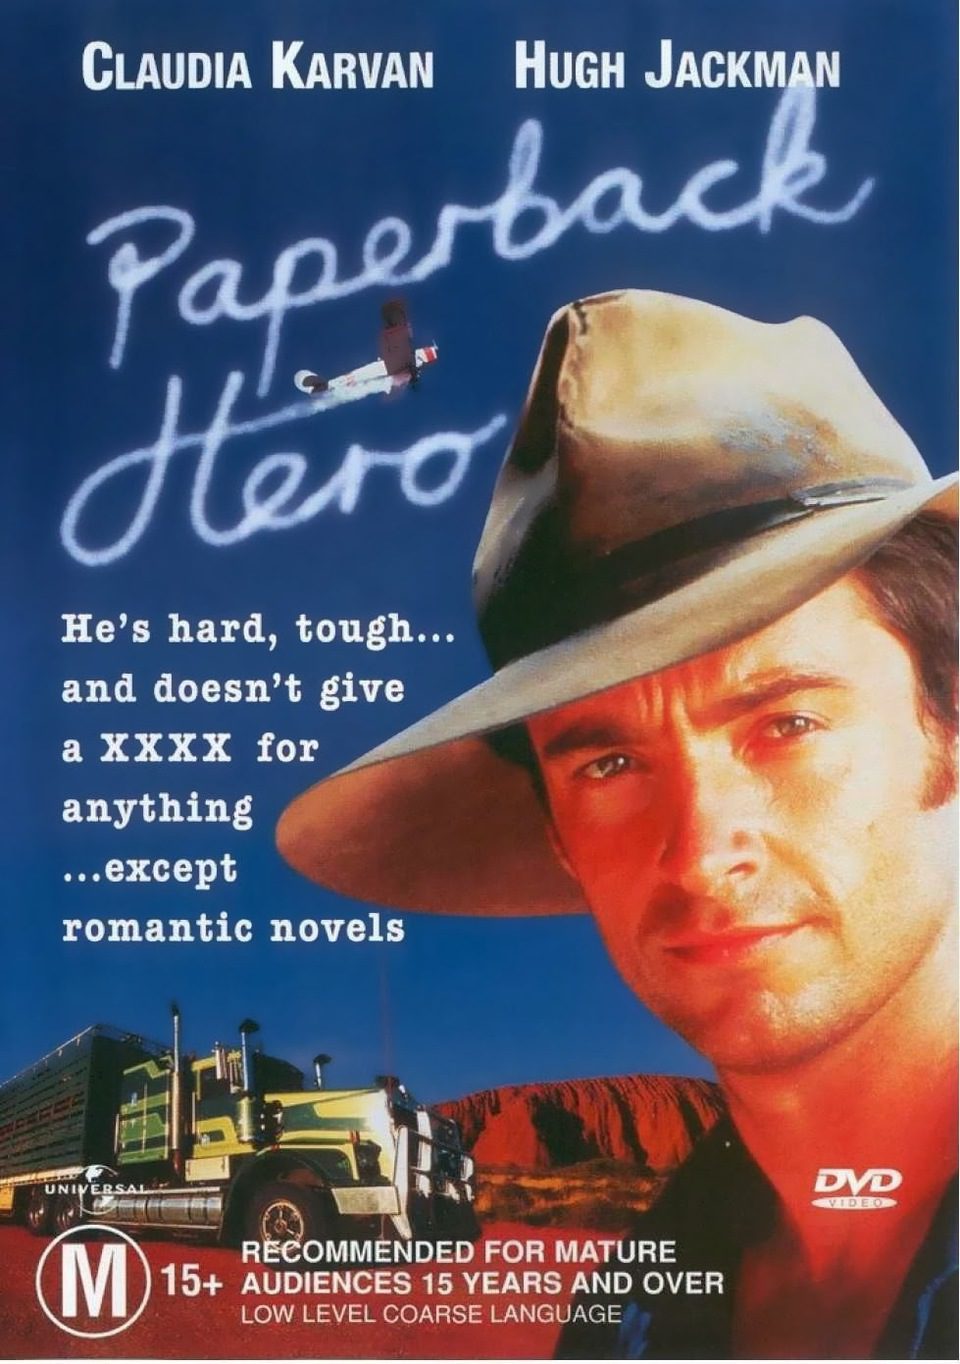 Poster of Paperback Hero - Australia